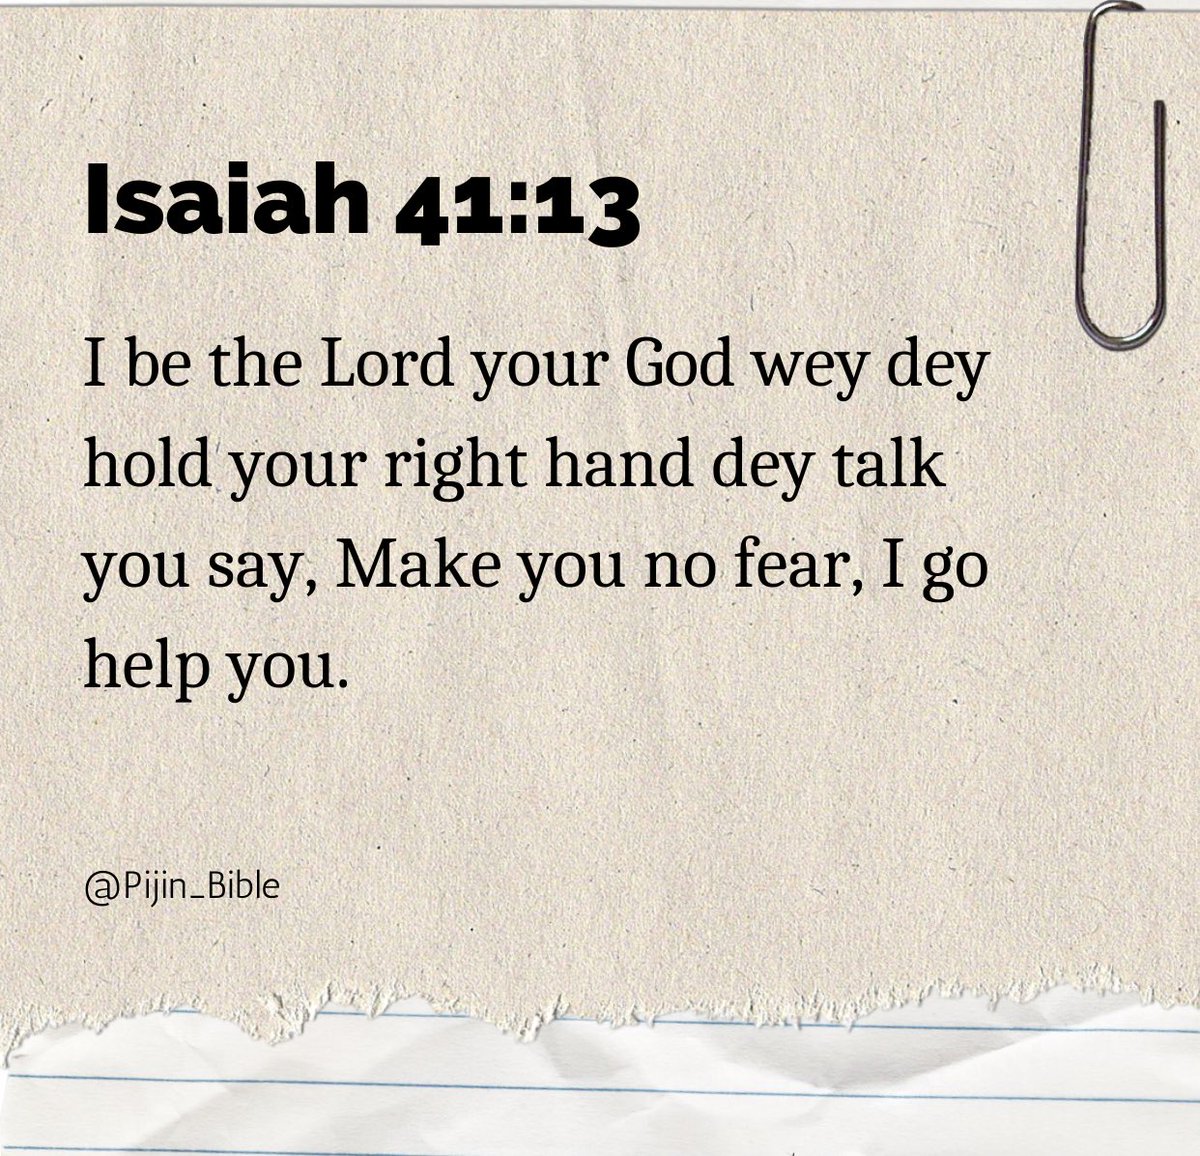 Isaiah 41:13
#PijinBible